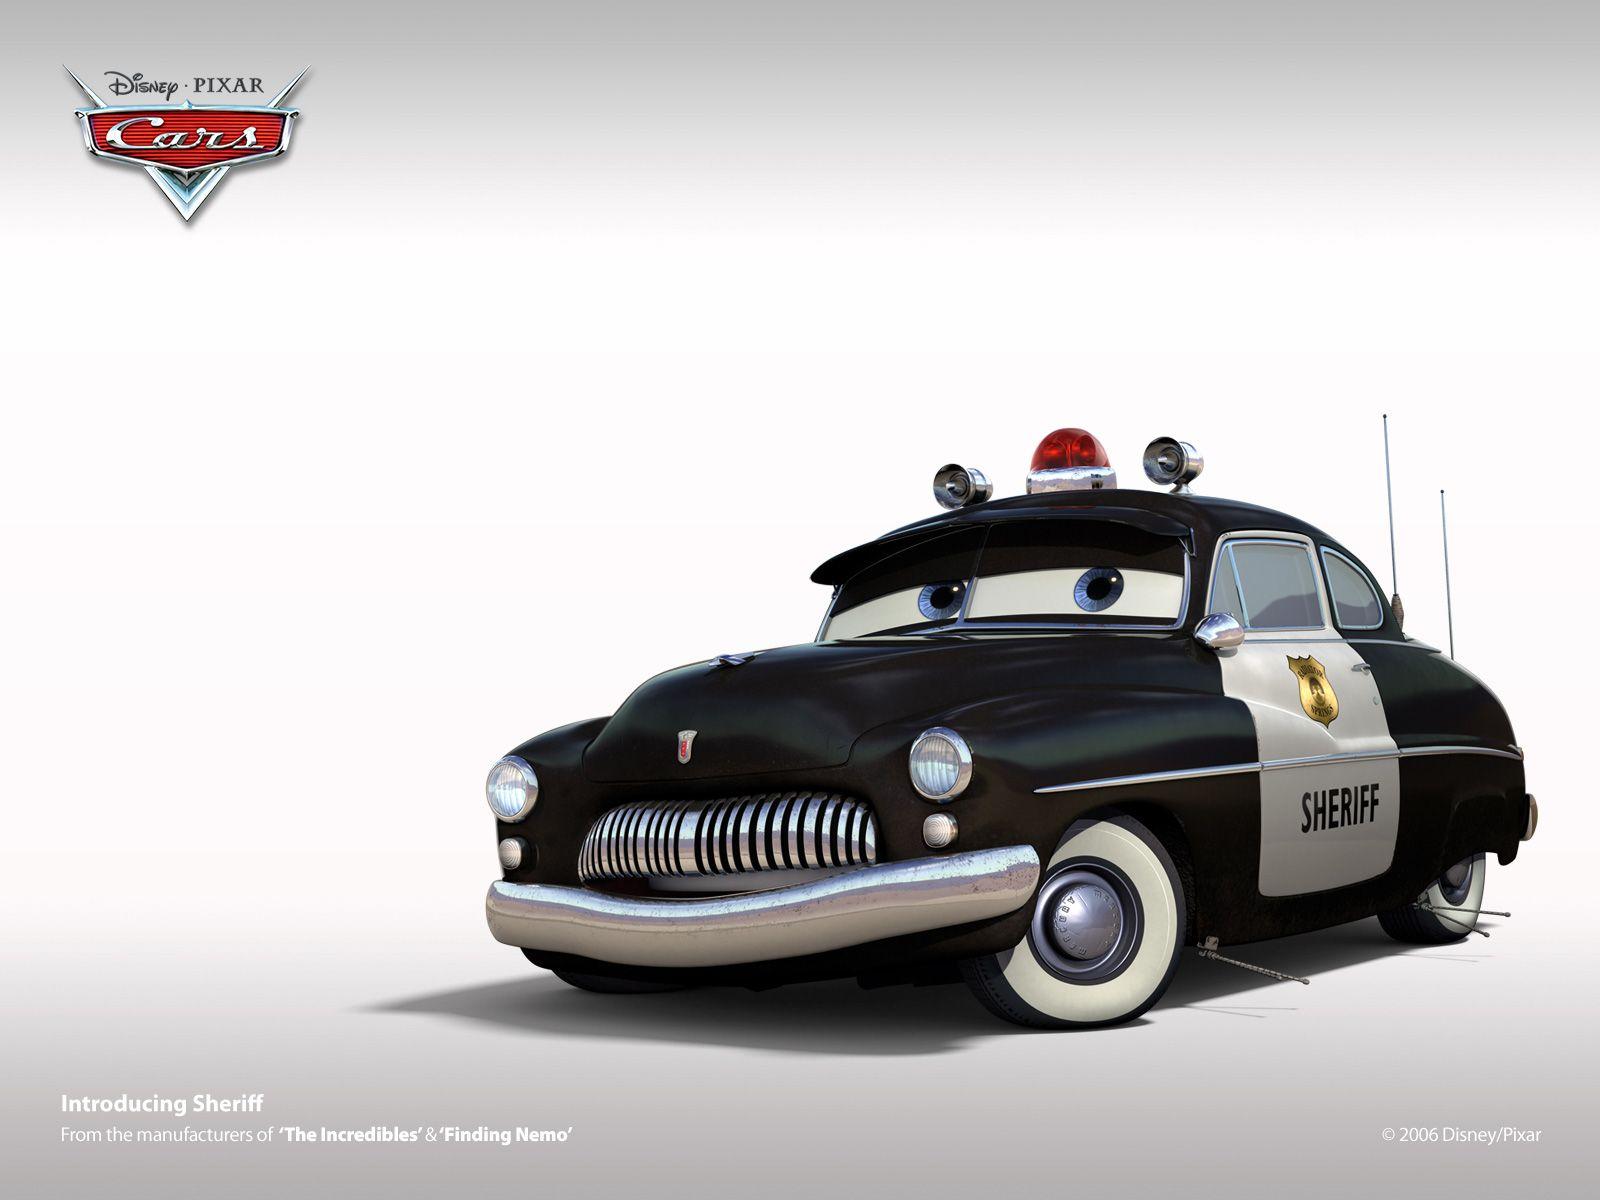 Sheriff Wallpaper Cars Cartoons Movies HD